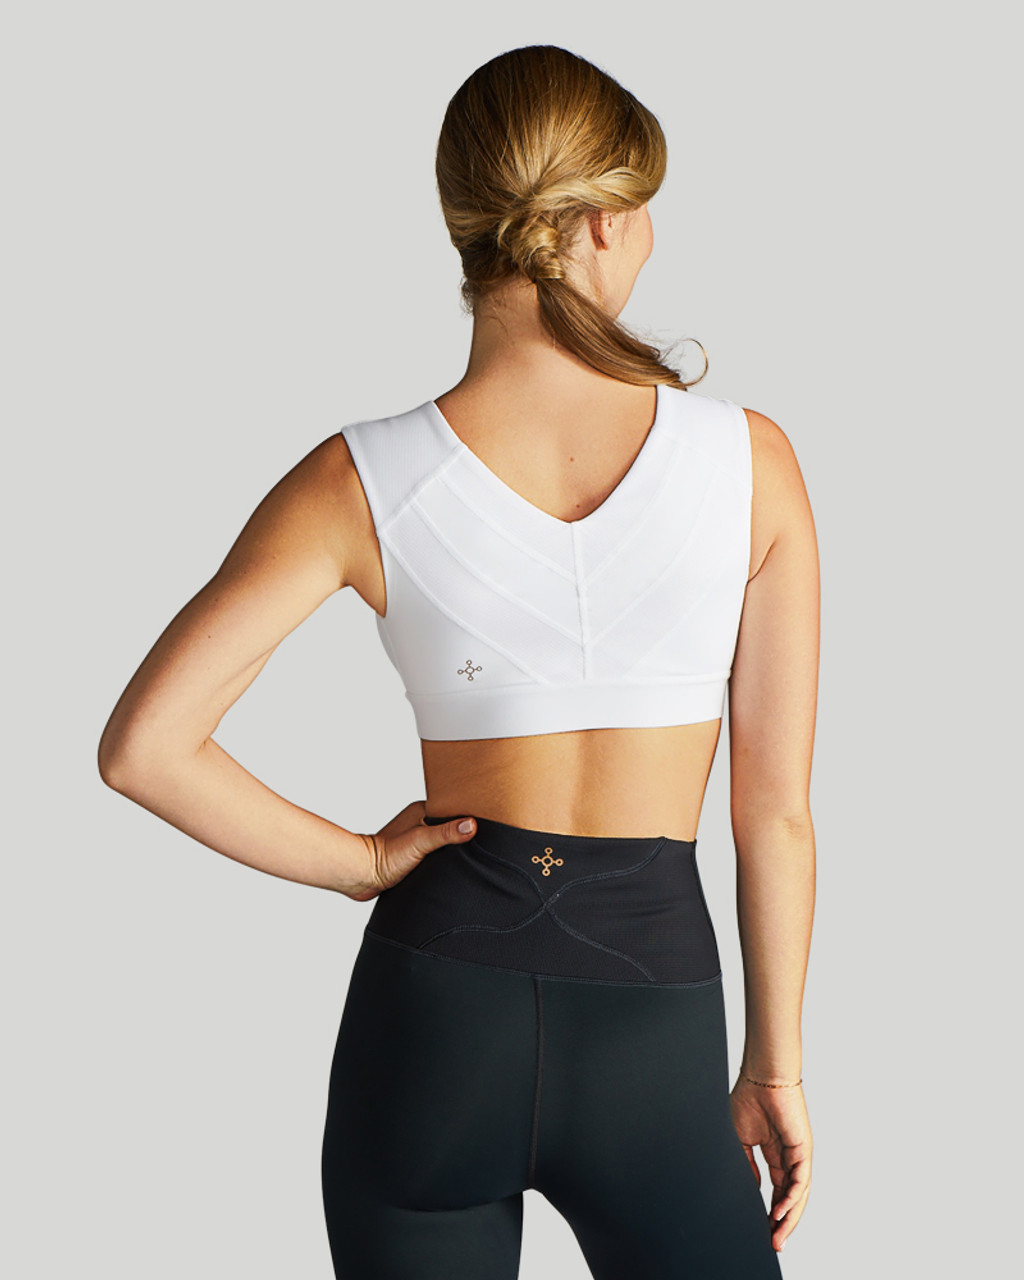 Tommie Copper Women's Shoulder Support Bra With Zipper Posture